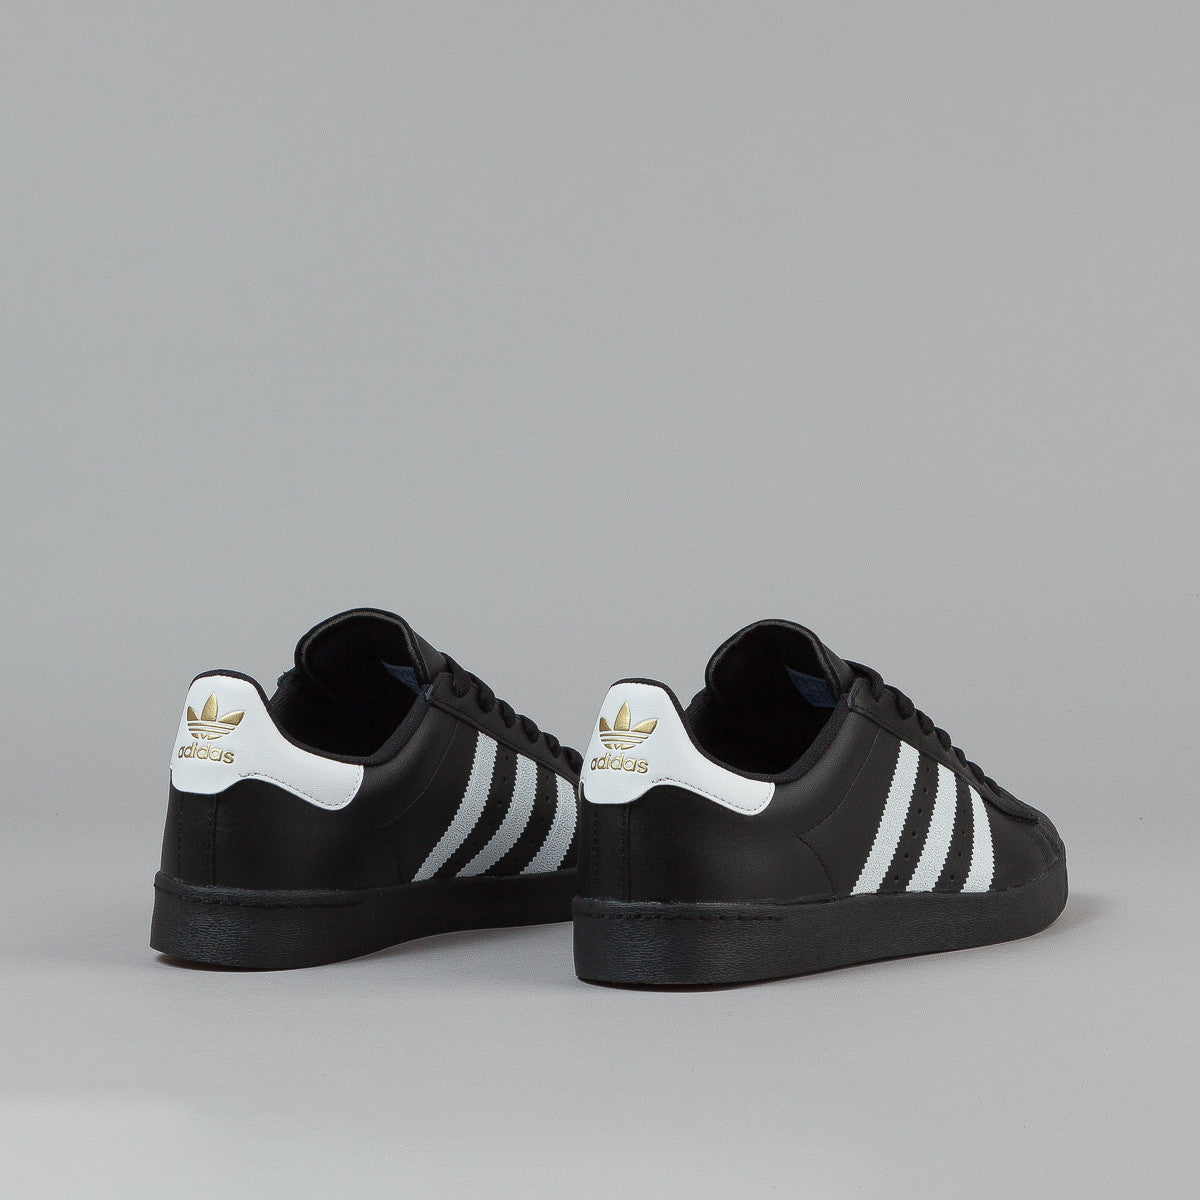 Adidas Superstar Vulc Adv Skate Shoes White Black White, Skate Sho